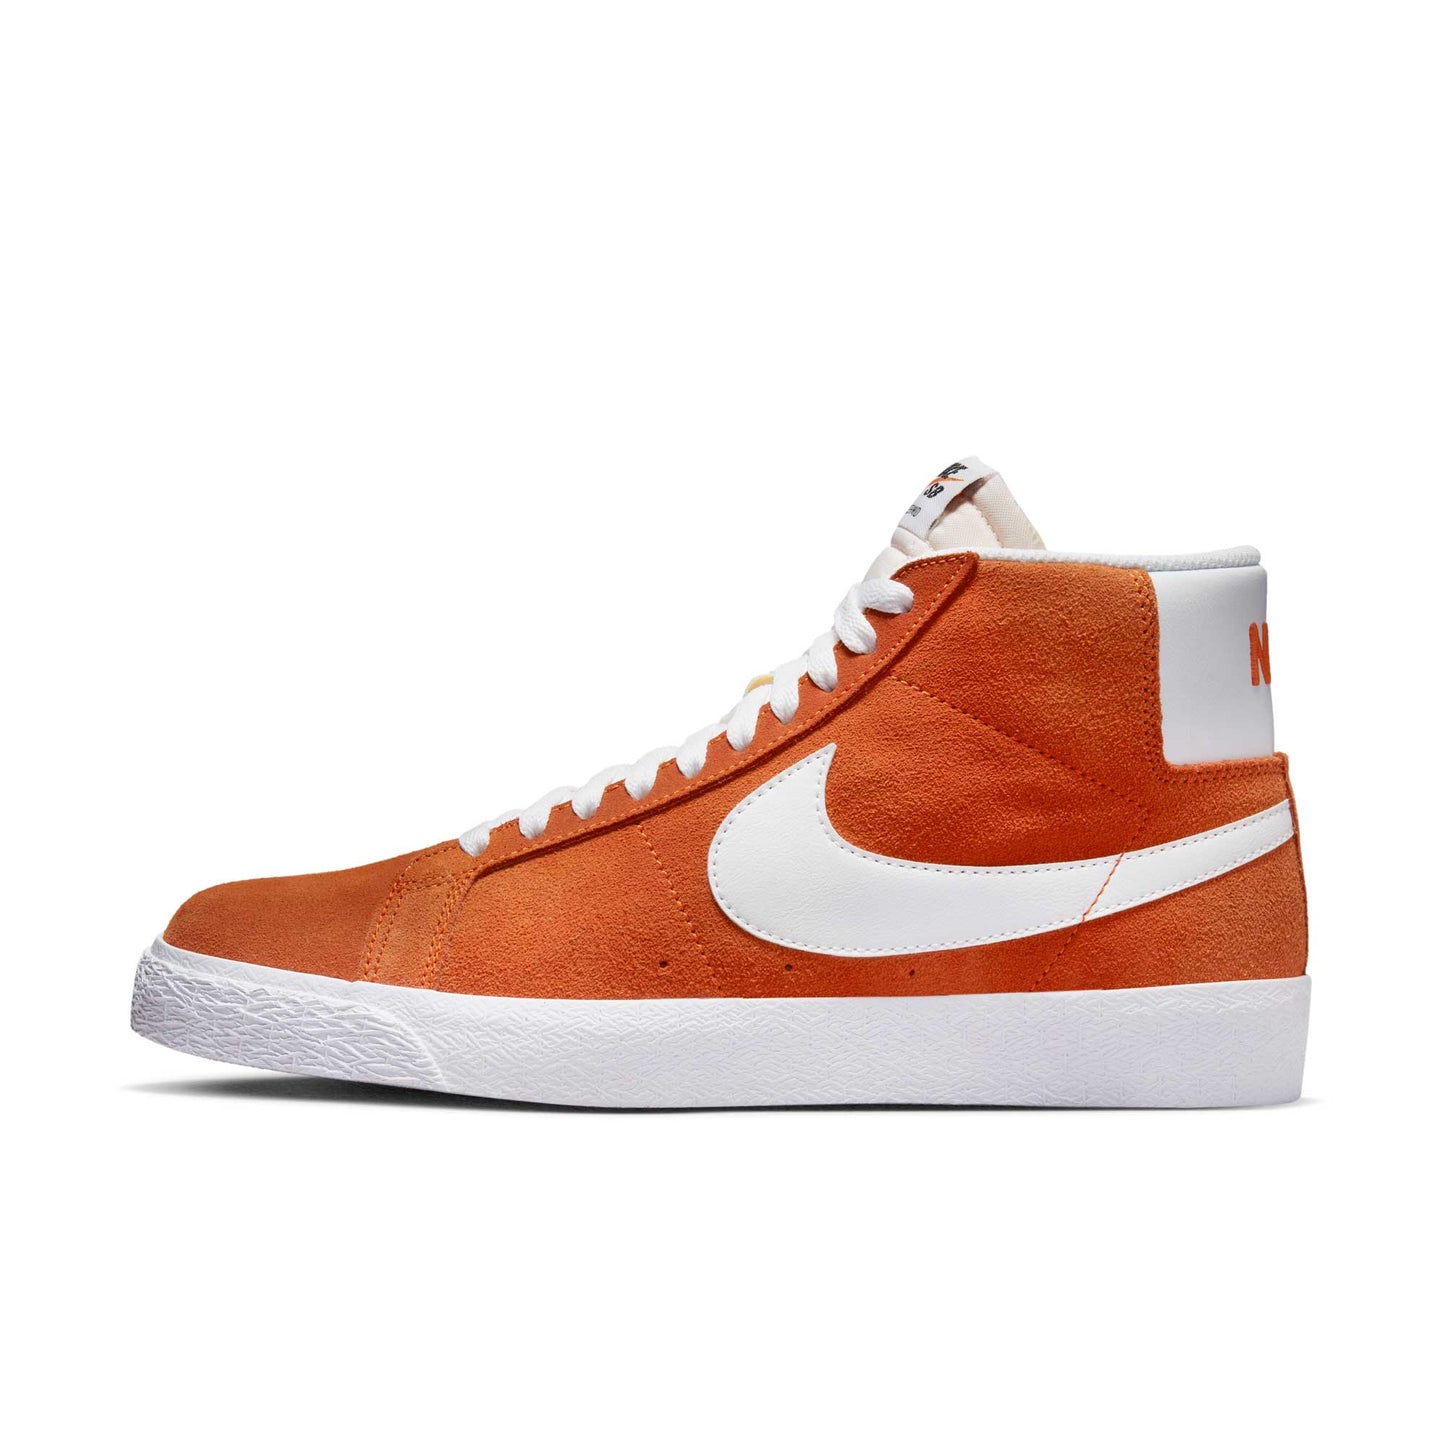 Nike SB Zoom Blazer Mid, safety orange/white-safety orange-white - Tiki Room Skateboards - 7